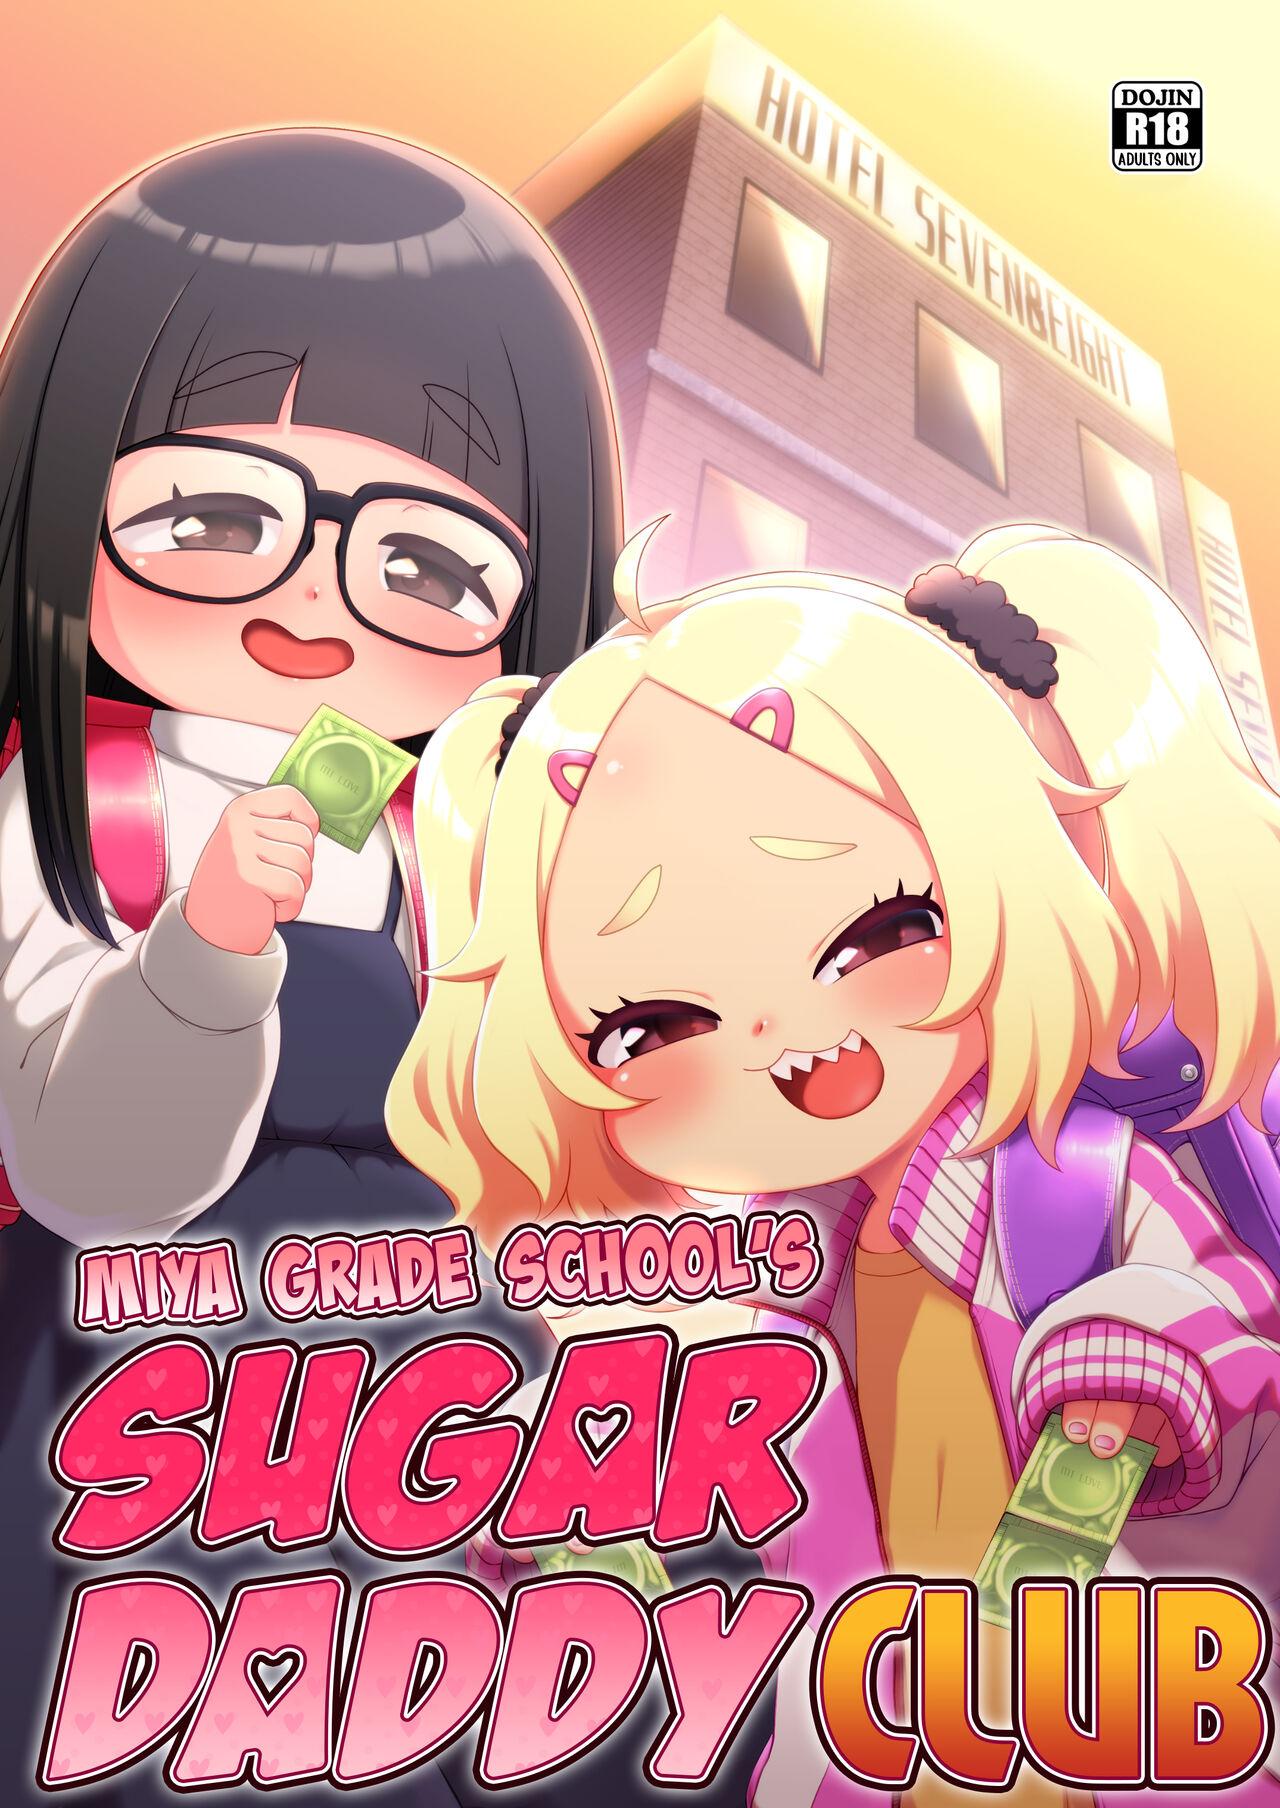 Shiritsu Miya Shou Papakatsu Club - Afterschool sex volunteers | Miya Grade School's Sugar Daddy Club 0